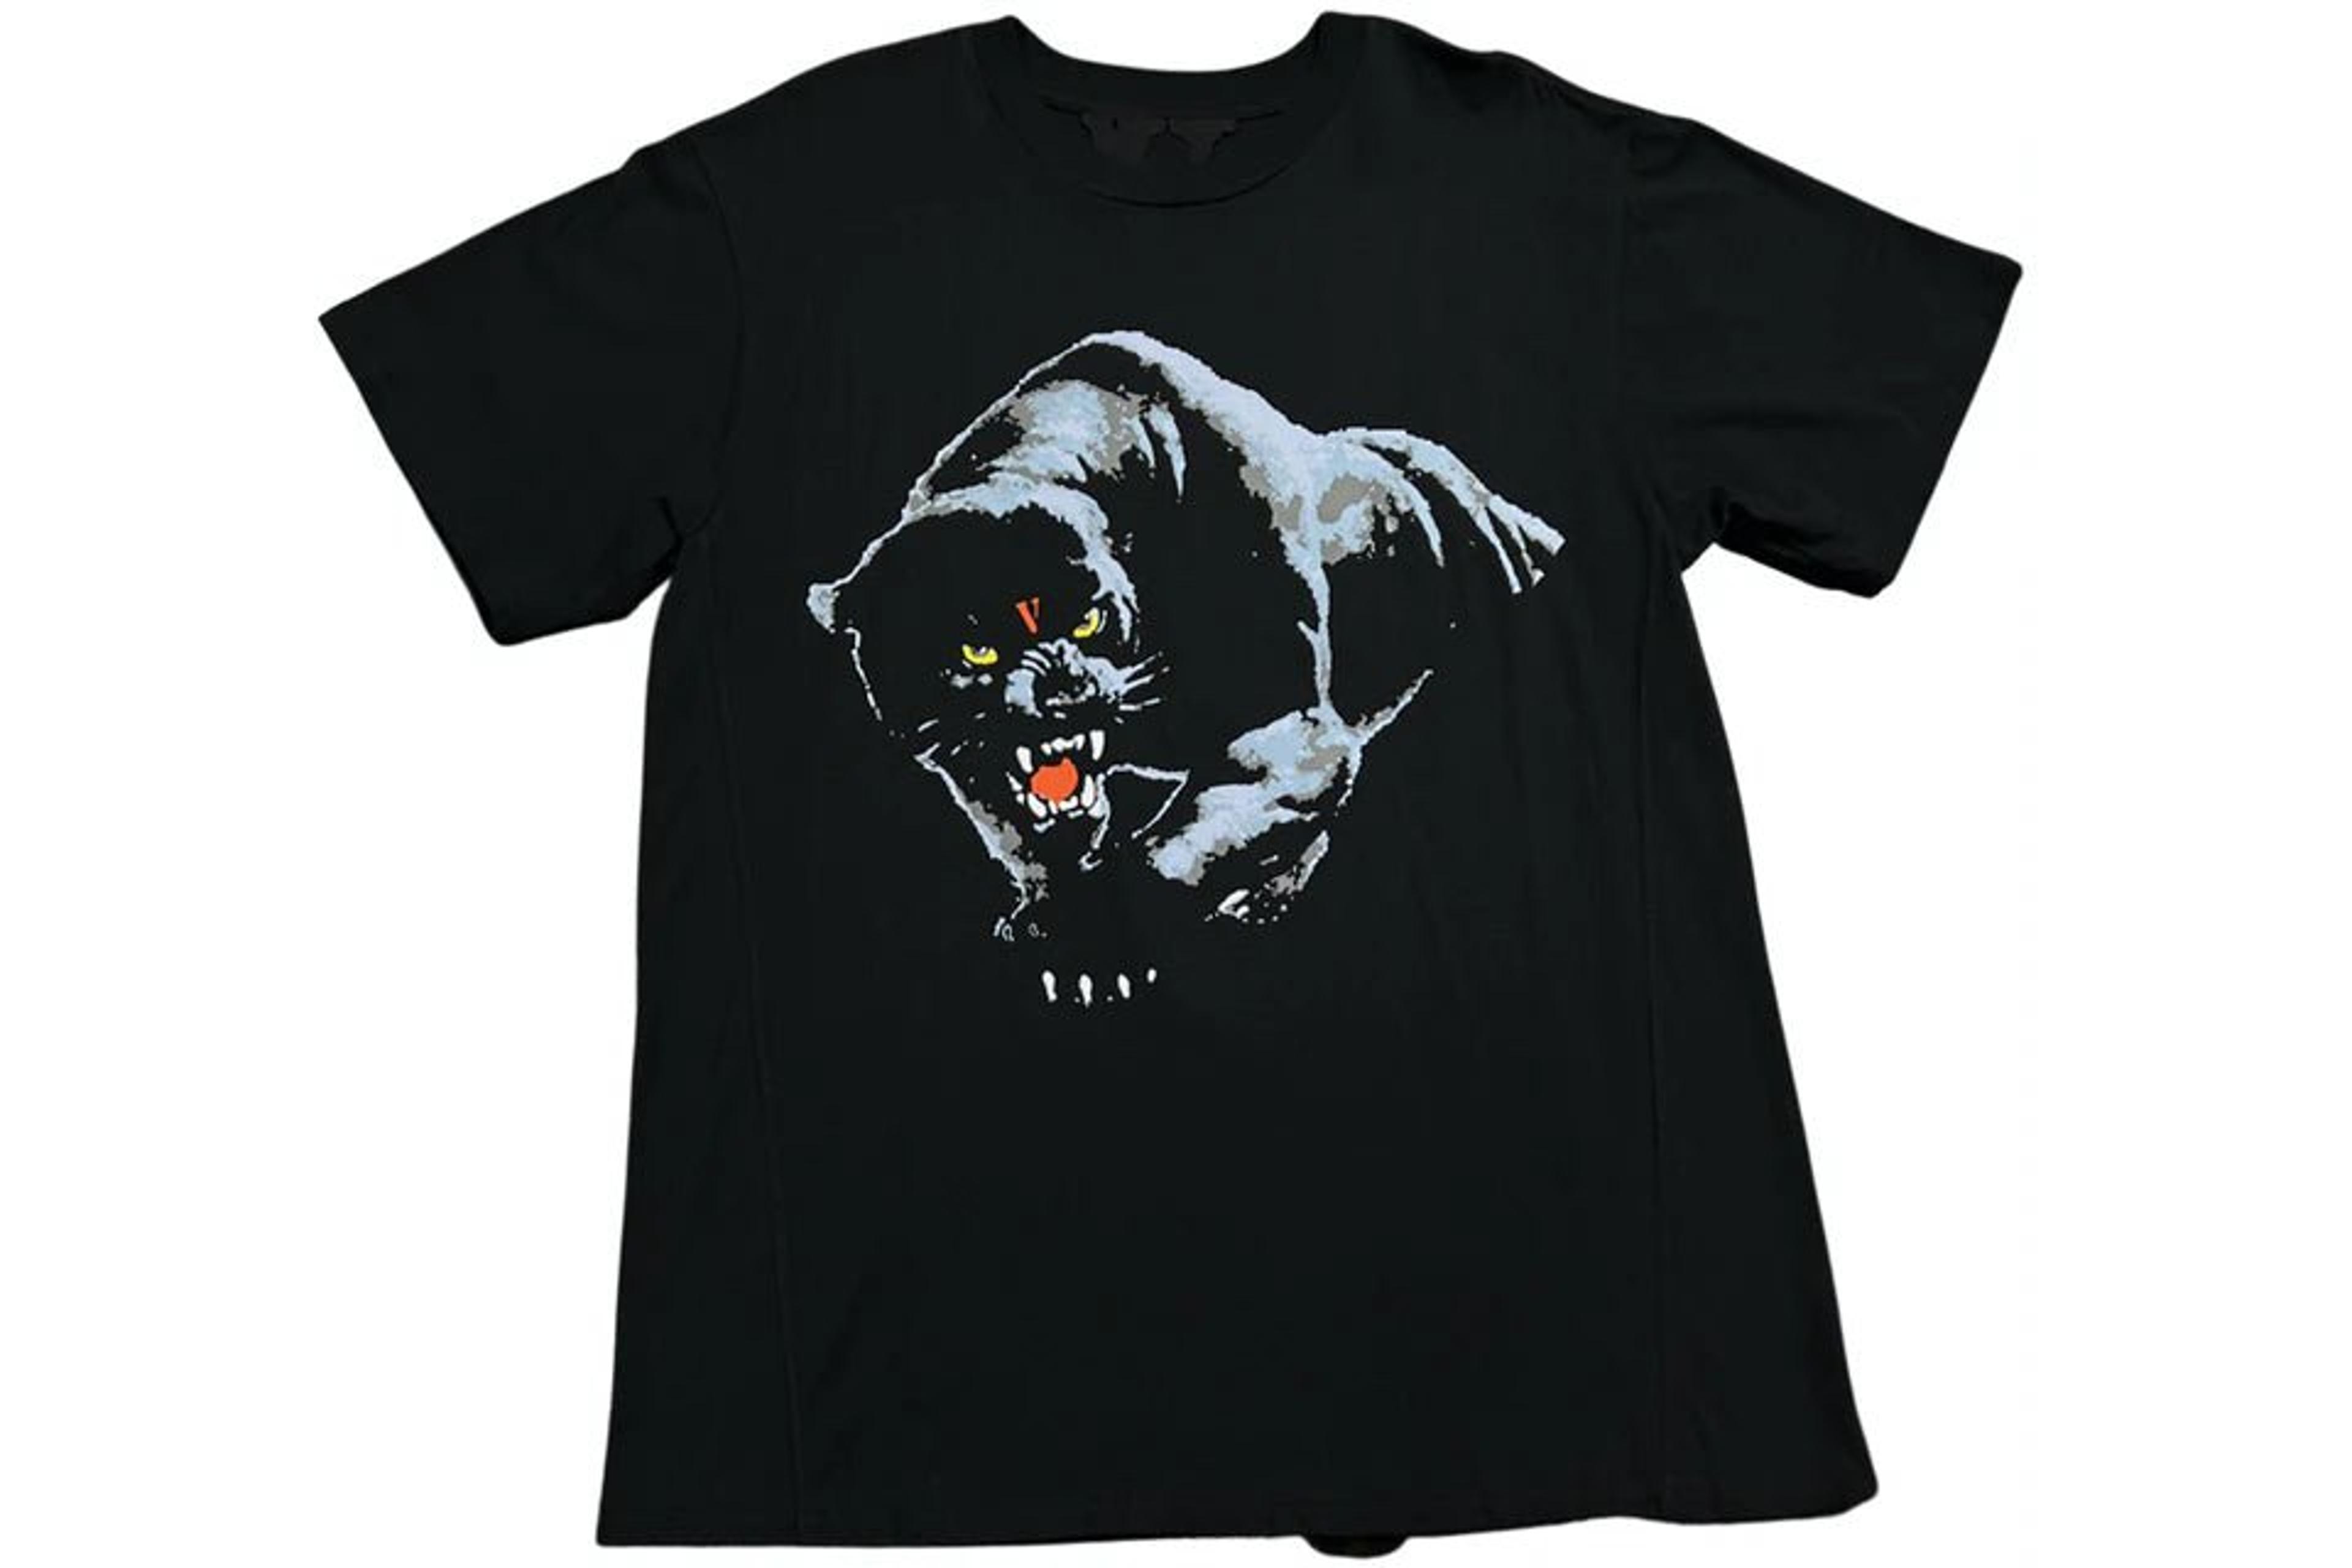 Vlone Black V Panther T-shirt Black